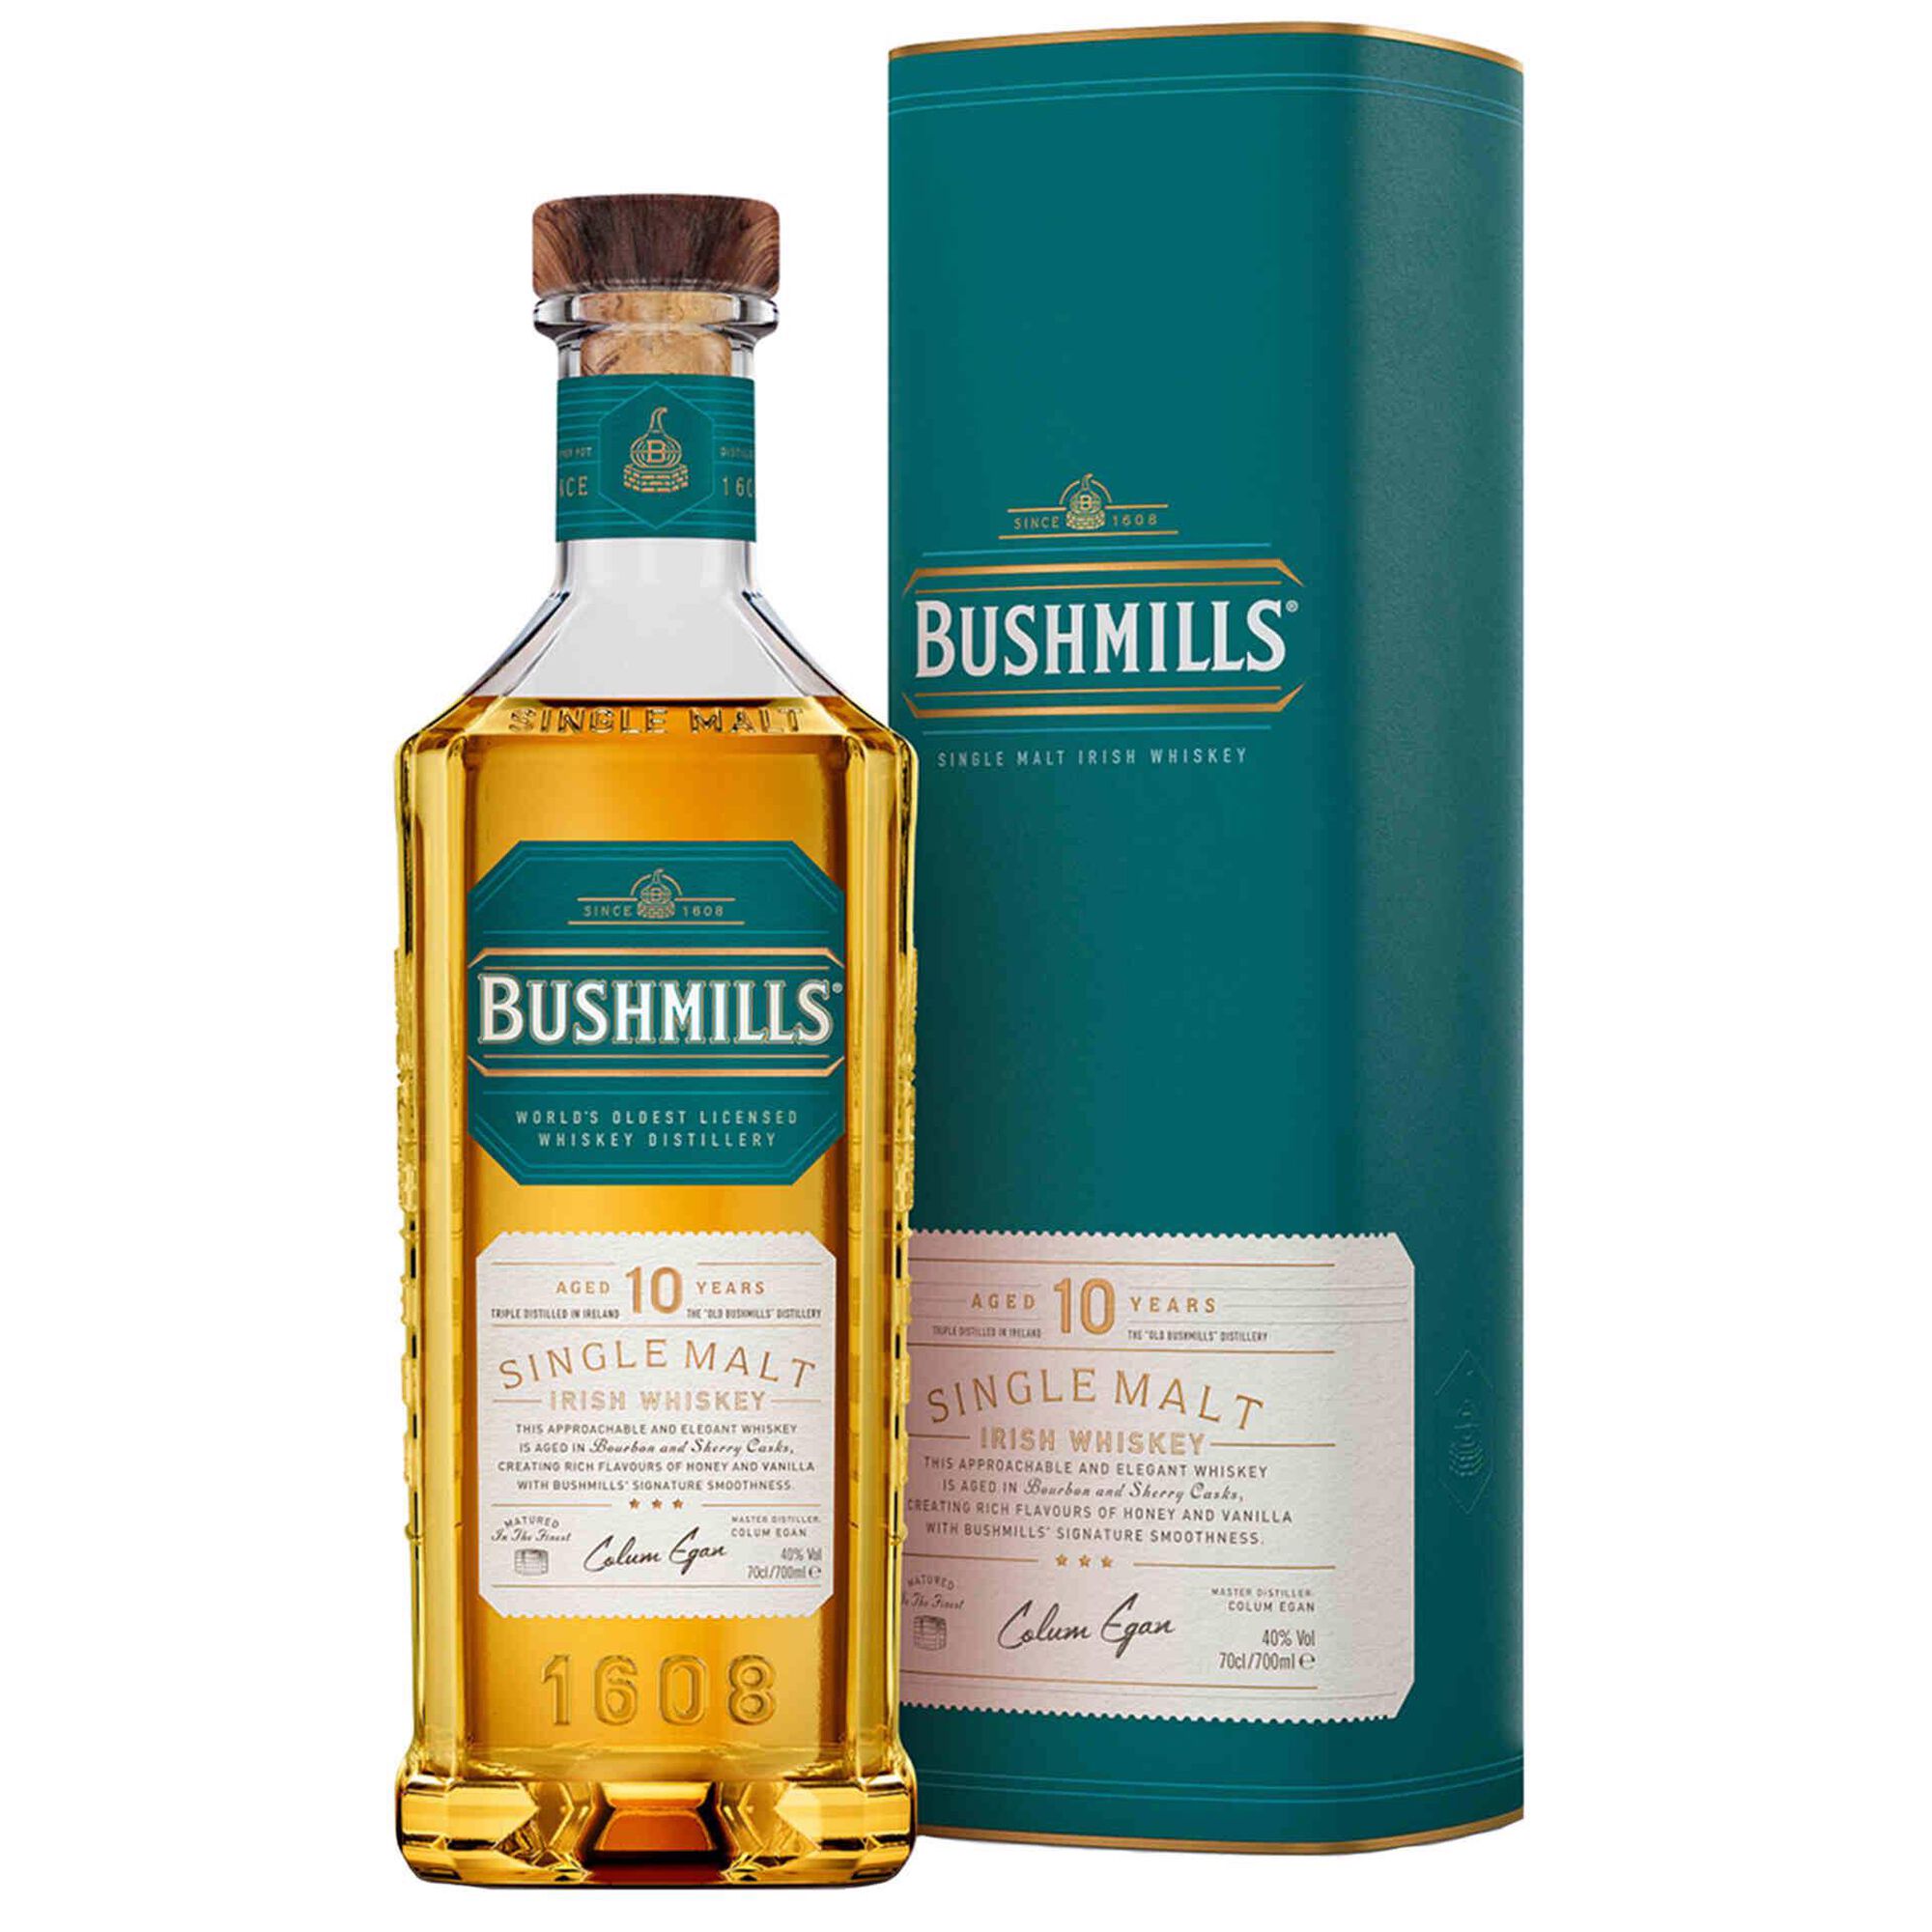 Whisky Bushmills 10 Anos